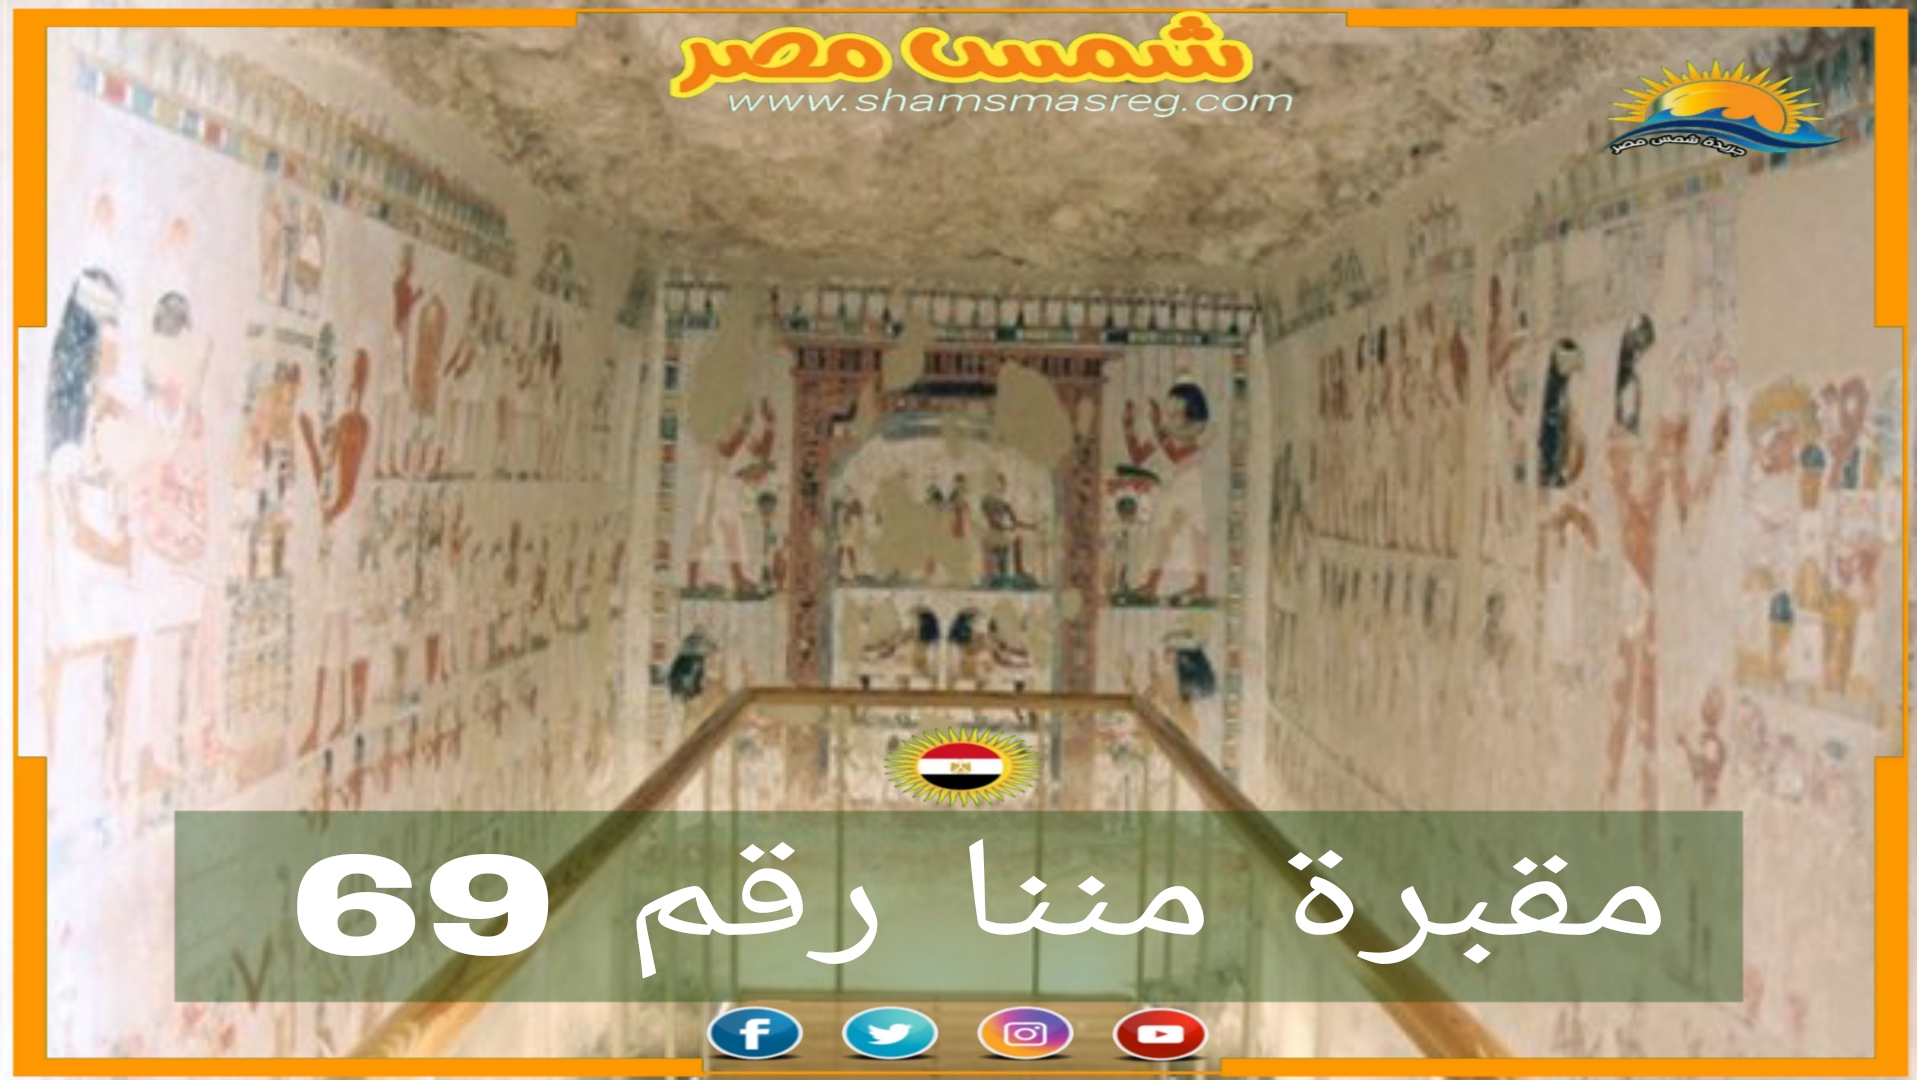 شمس مصر/ مقبرة مننا رقم 69